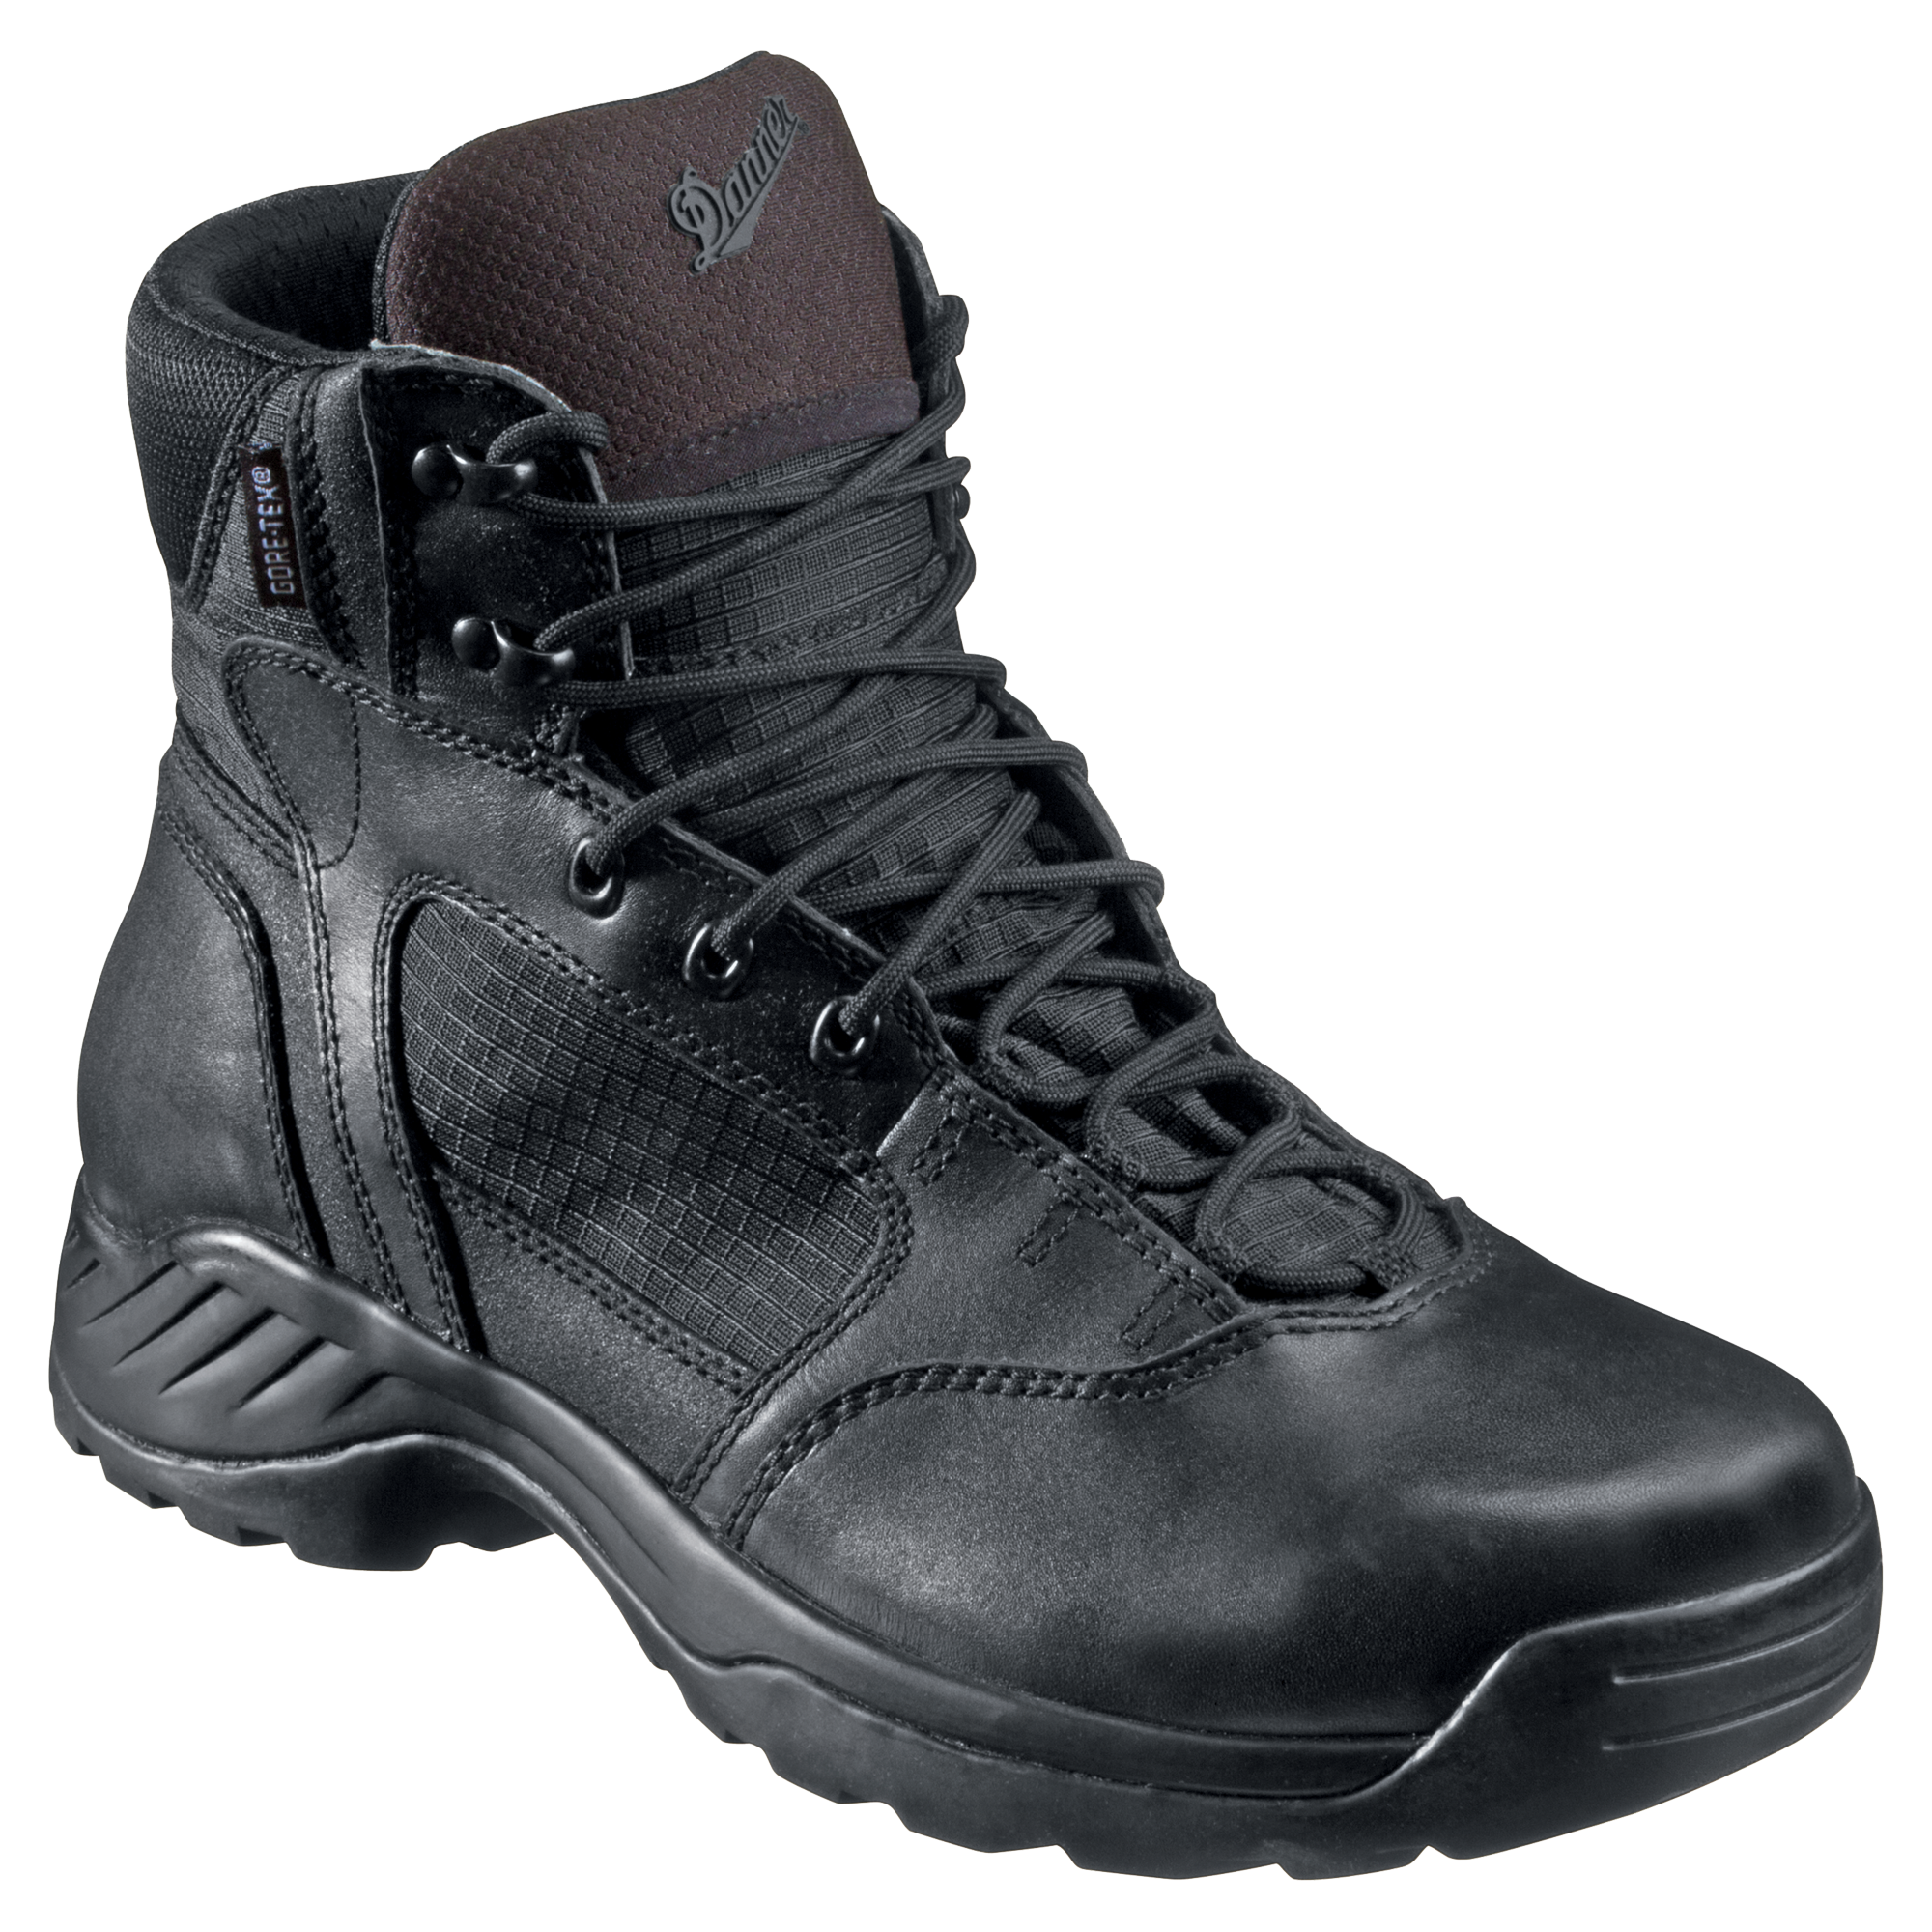 Danner Kinetic GTX 6' Side-Zip Waterproof Tactical Duty Boots for Men - Black - 16W